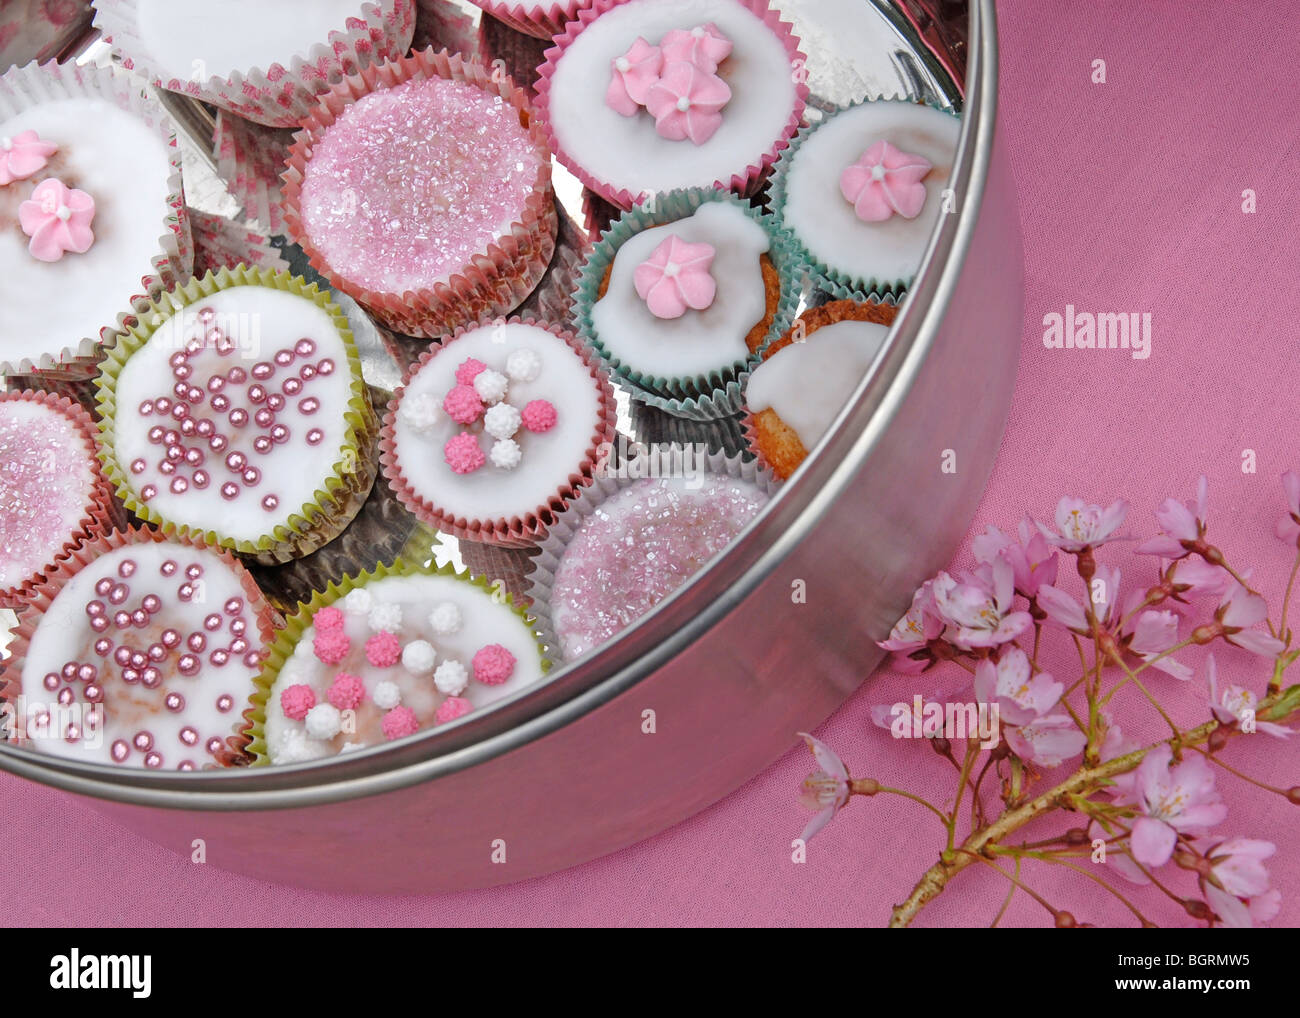 Tarta decorada con estaño plata pasteles de hadas sobre fondo de color rosa con flor de cerezo Foto de stock